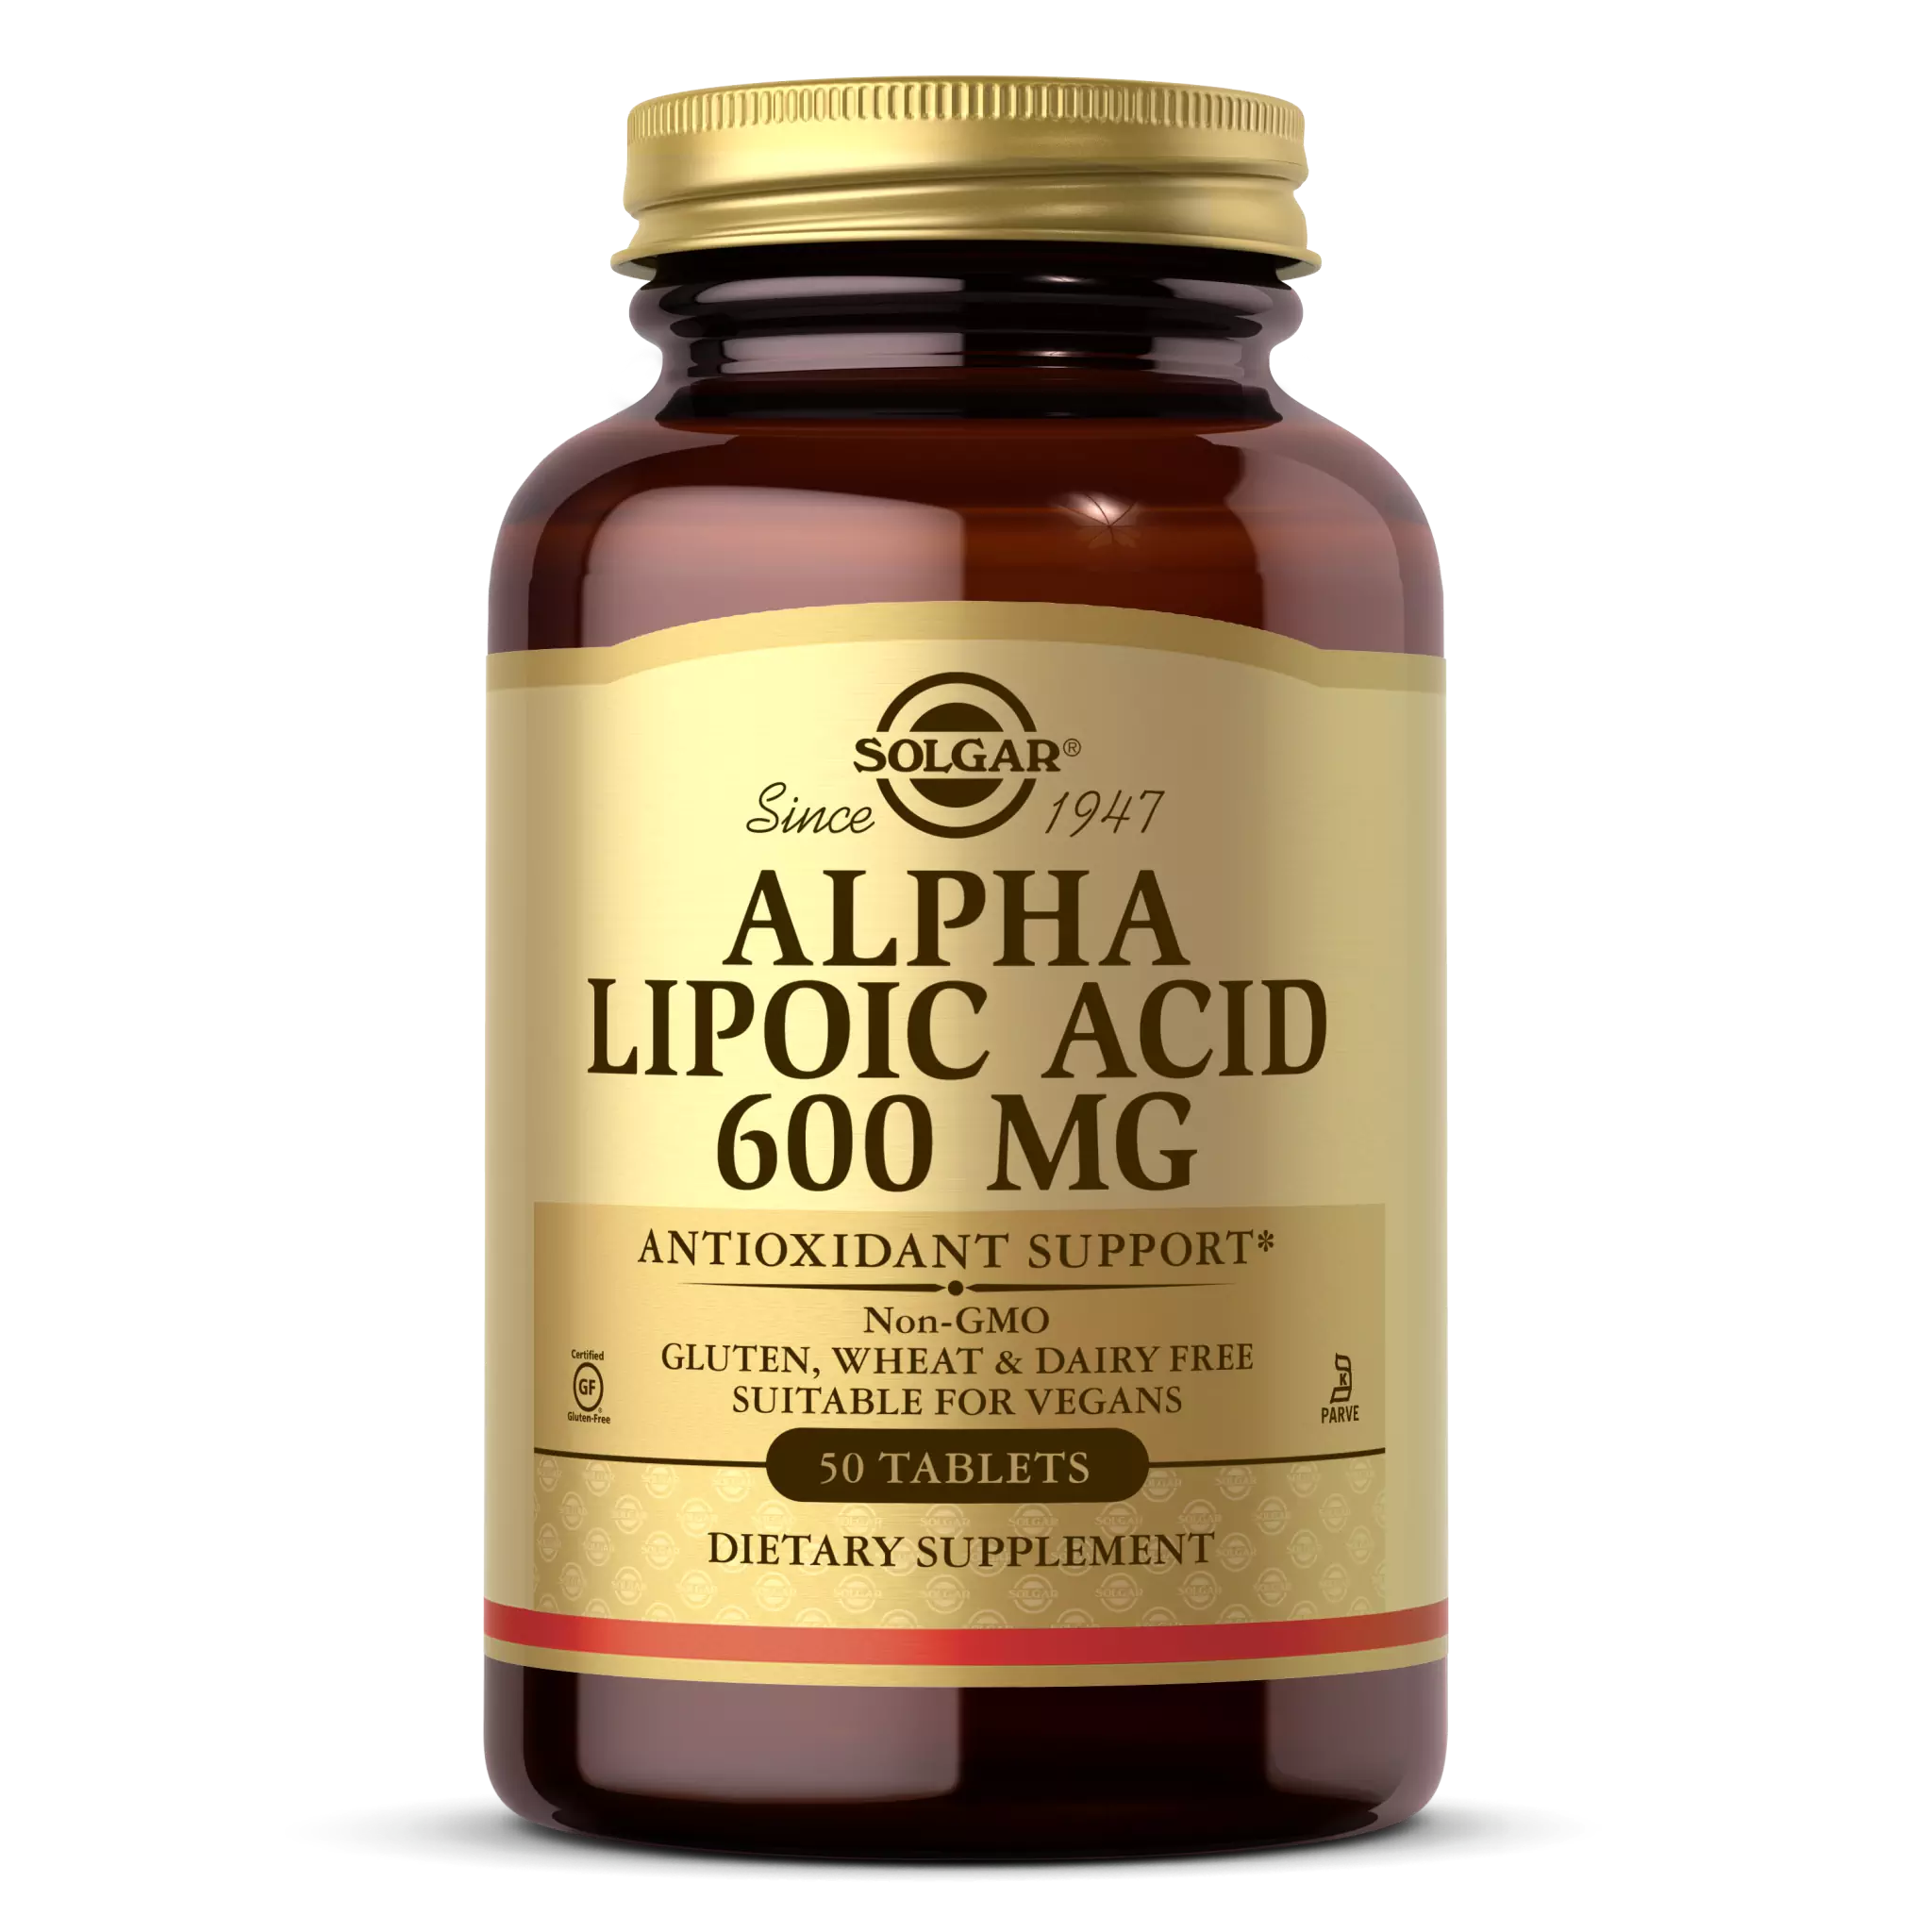 Solgar - Lipoic Acid 600 mg Alpha